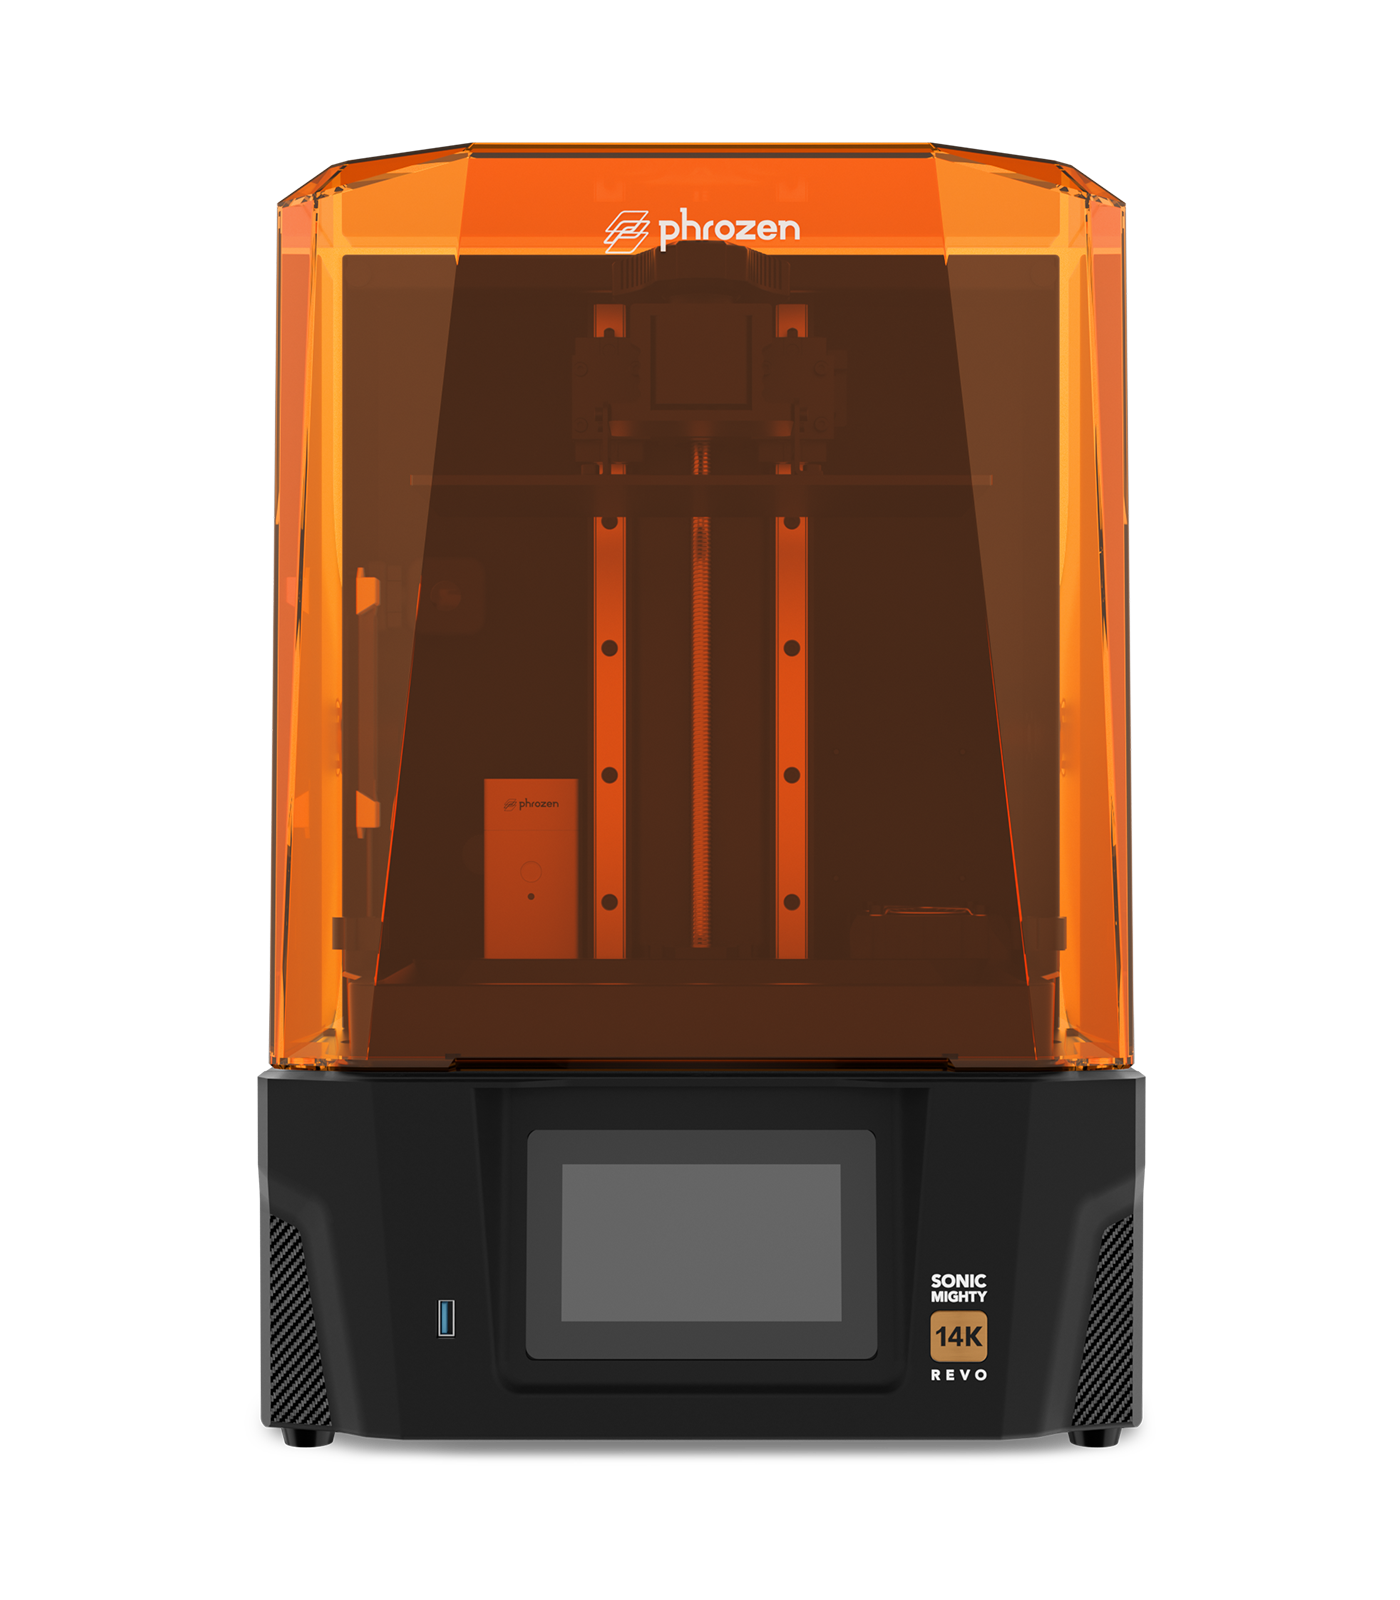 Phrozen Sonic Mighty Revo 14K 3D Printer (Preorder)